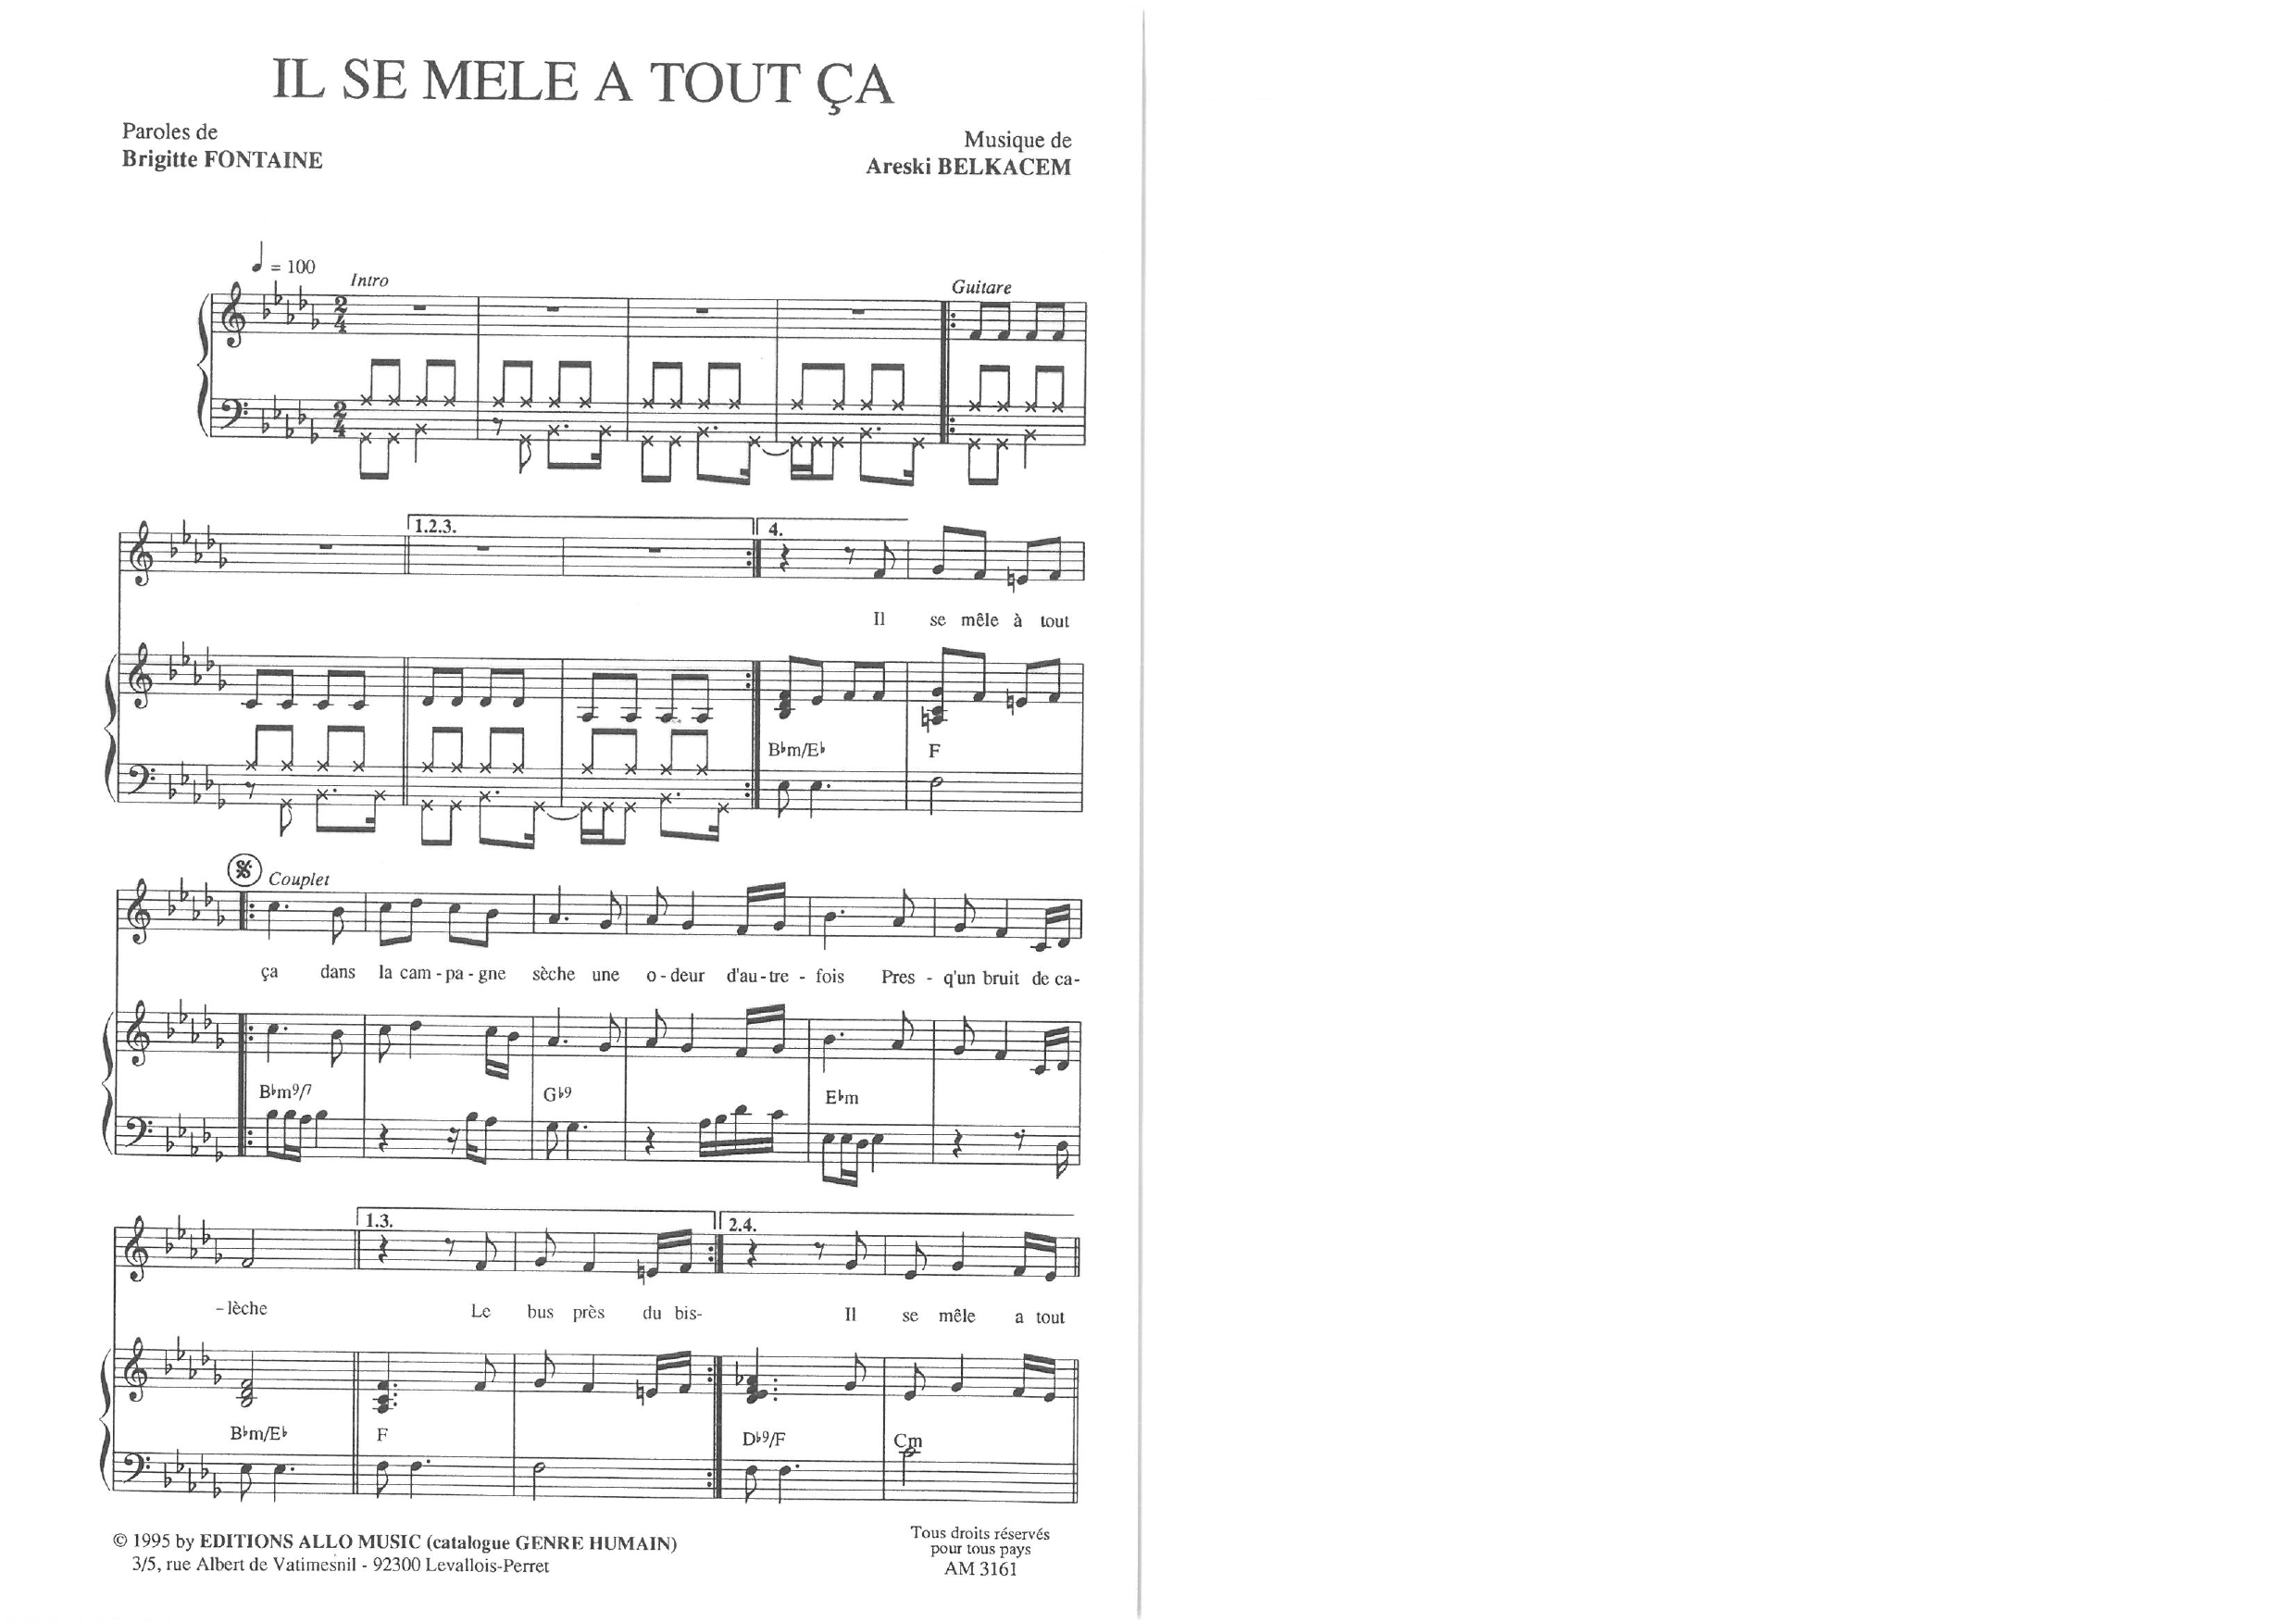 Brigitte Fontaine & Areski Belkacem Il S'en Passe Sheet Music Notes & Chords for Piano & Vocal - Download or Print PDF